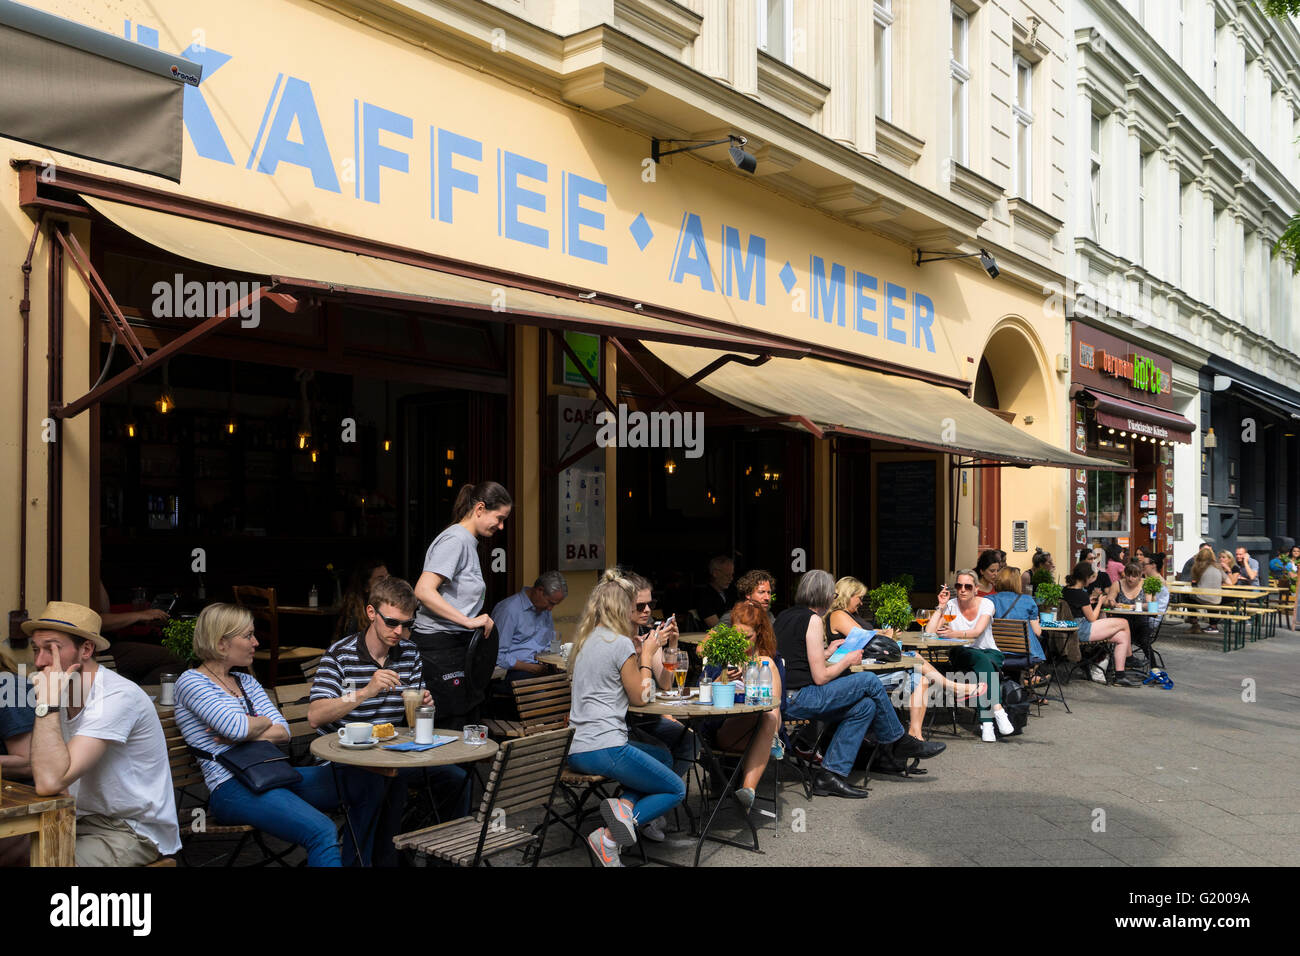 Kaffee am Meer cafe on Bergmannstrasse in Kreuzberg Berlin Germany Stock Photo